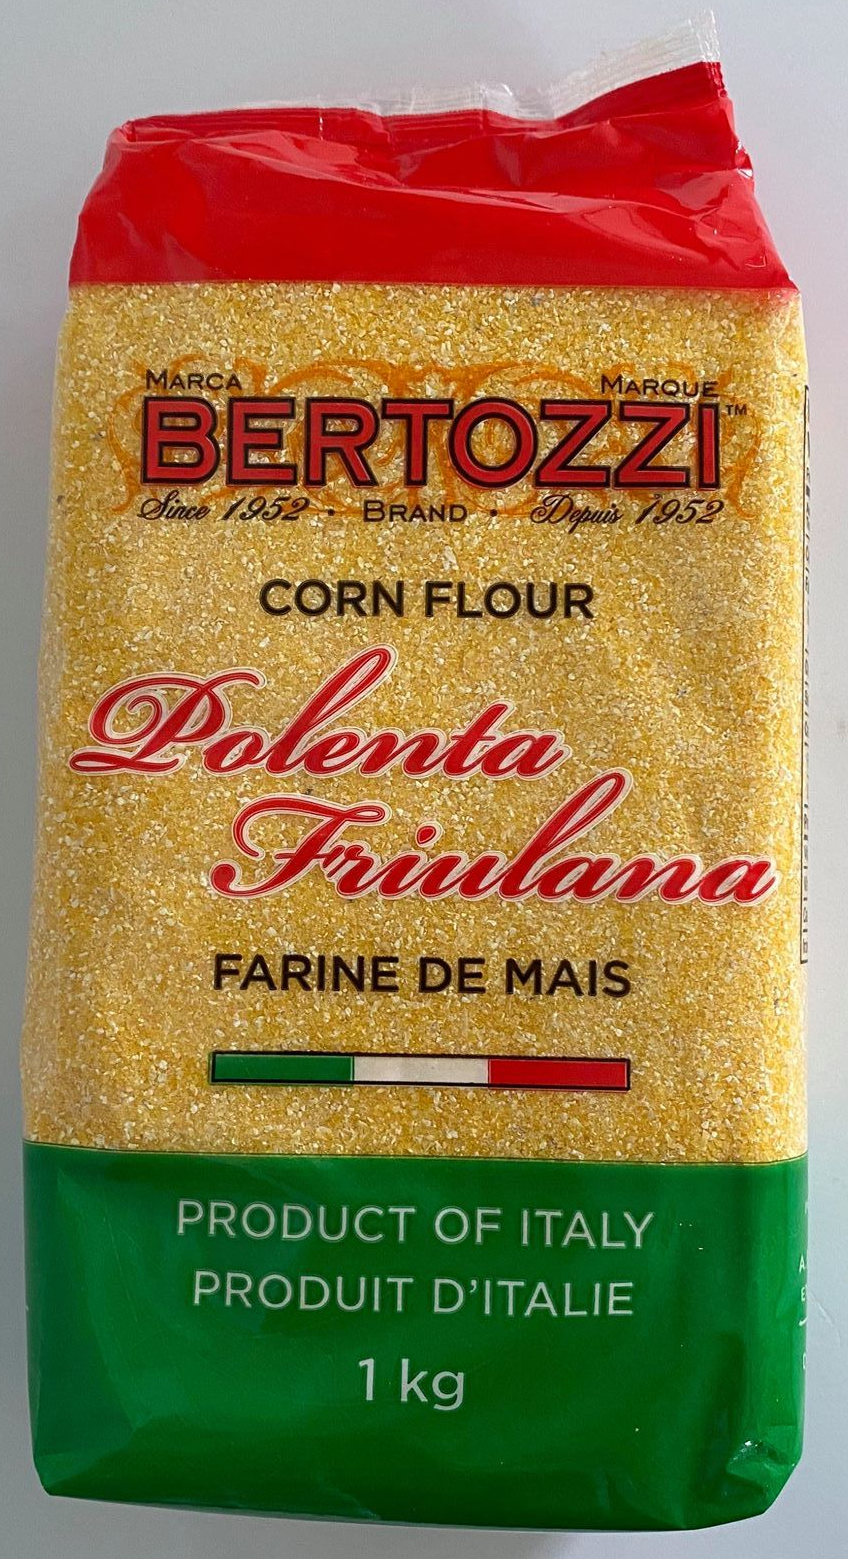 Bertozzi - CLASSIC Stone Ground Polenta Friulana - 1kg (20 min ++ cooking time)